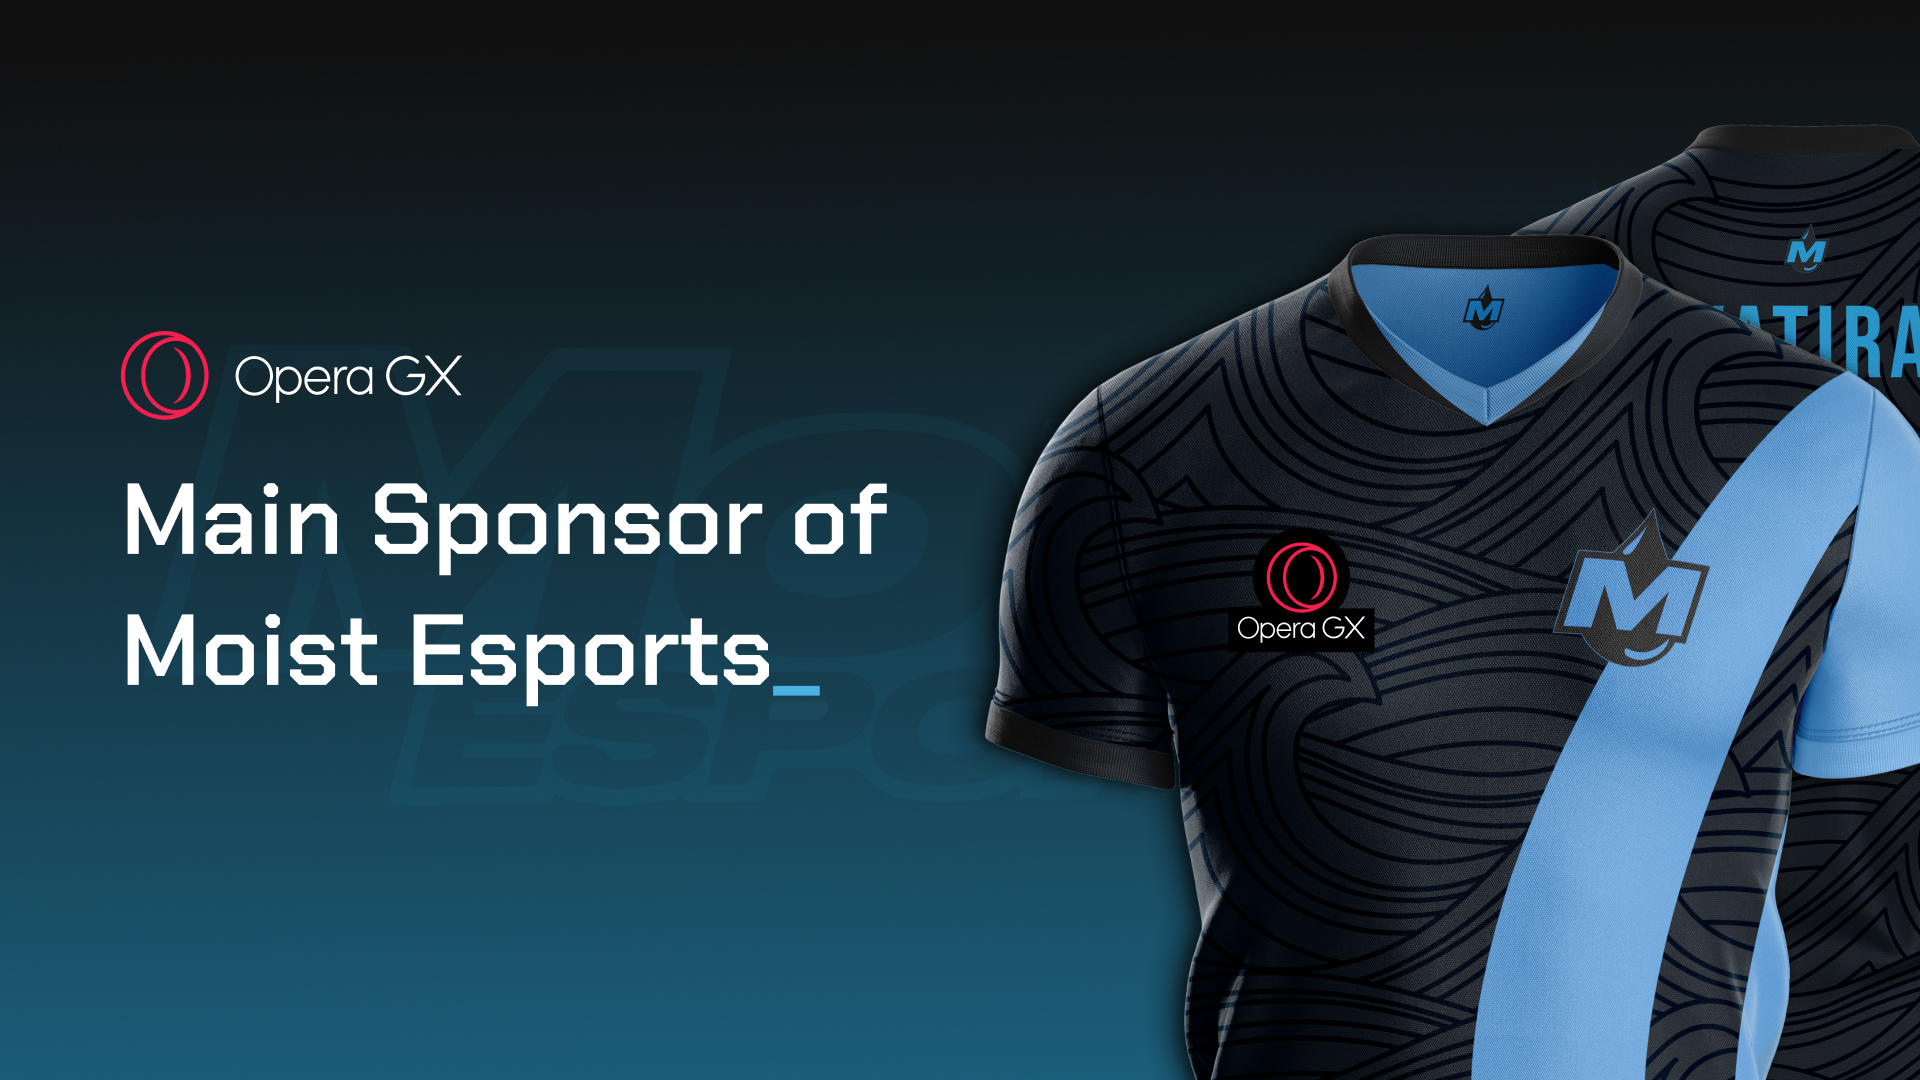 Opera GX announces sponsorship of Moist Esports team.